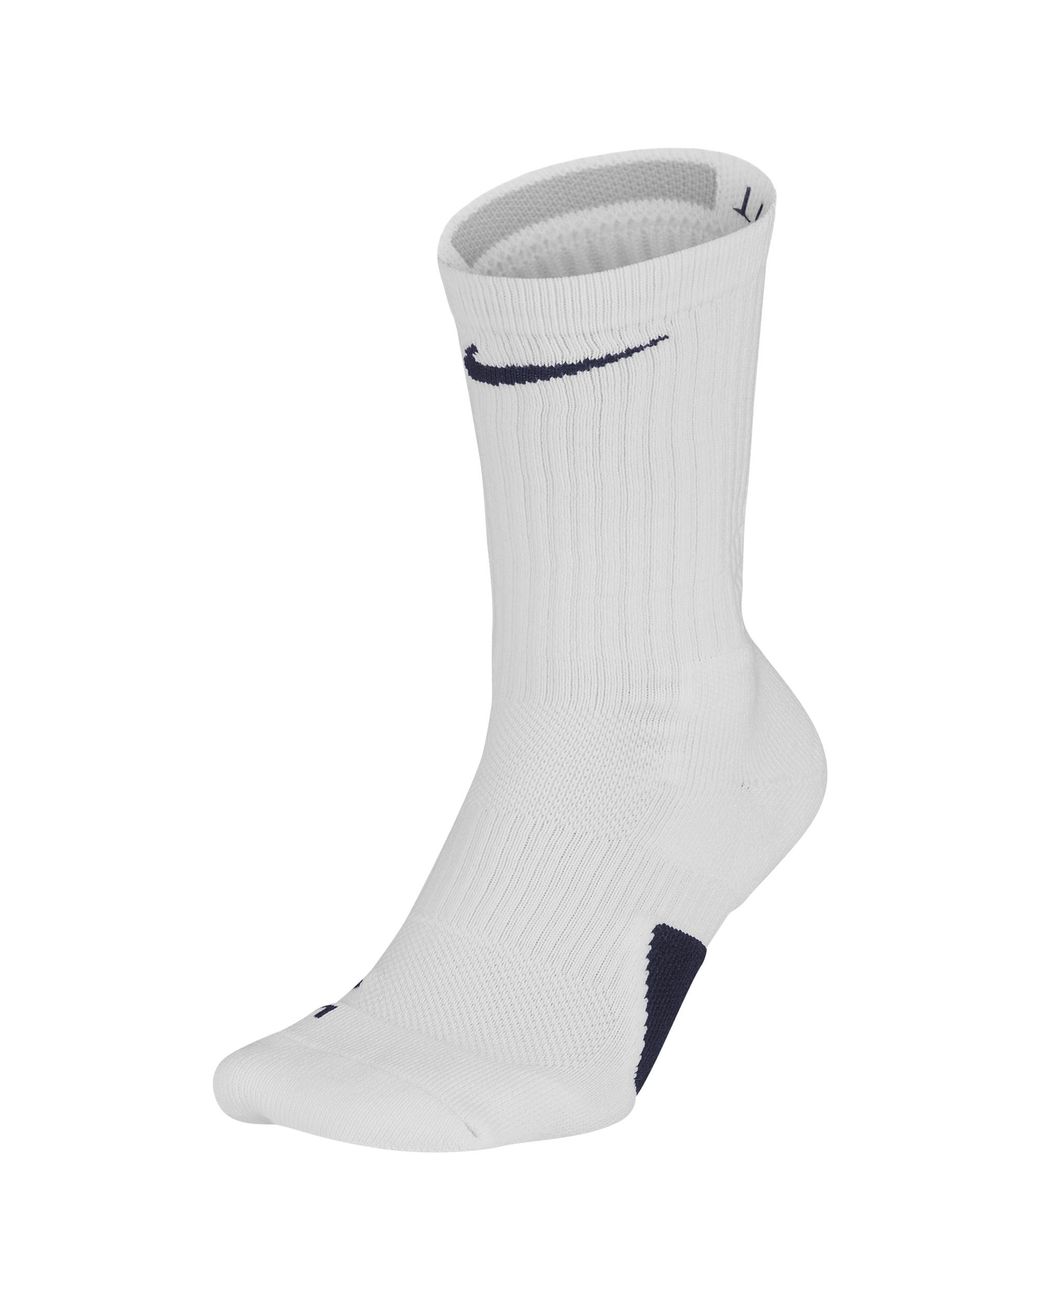 Nike Synthetic Elite Crew Socks in Blue - Lyst